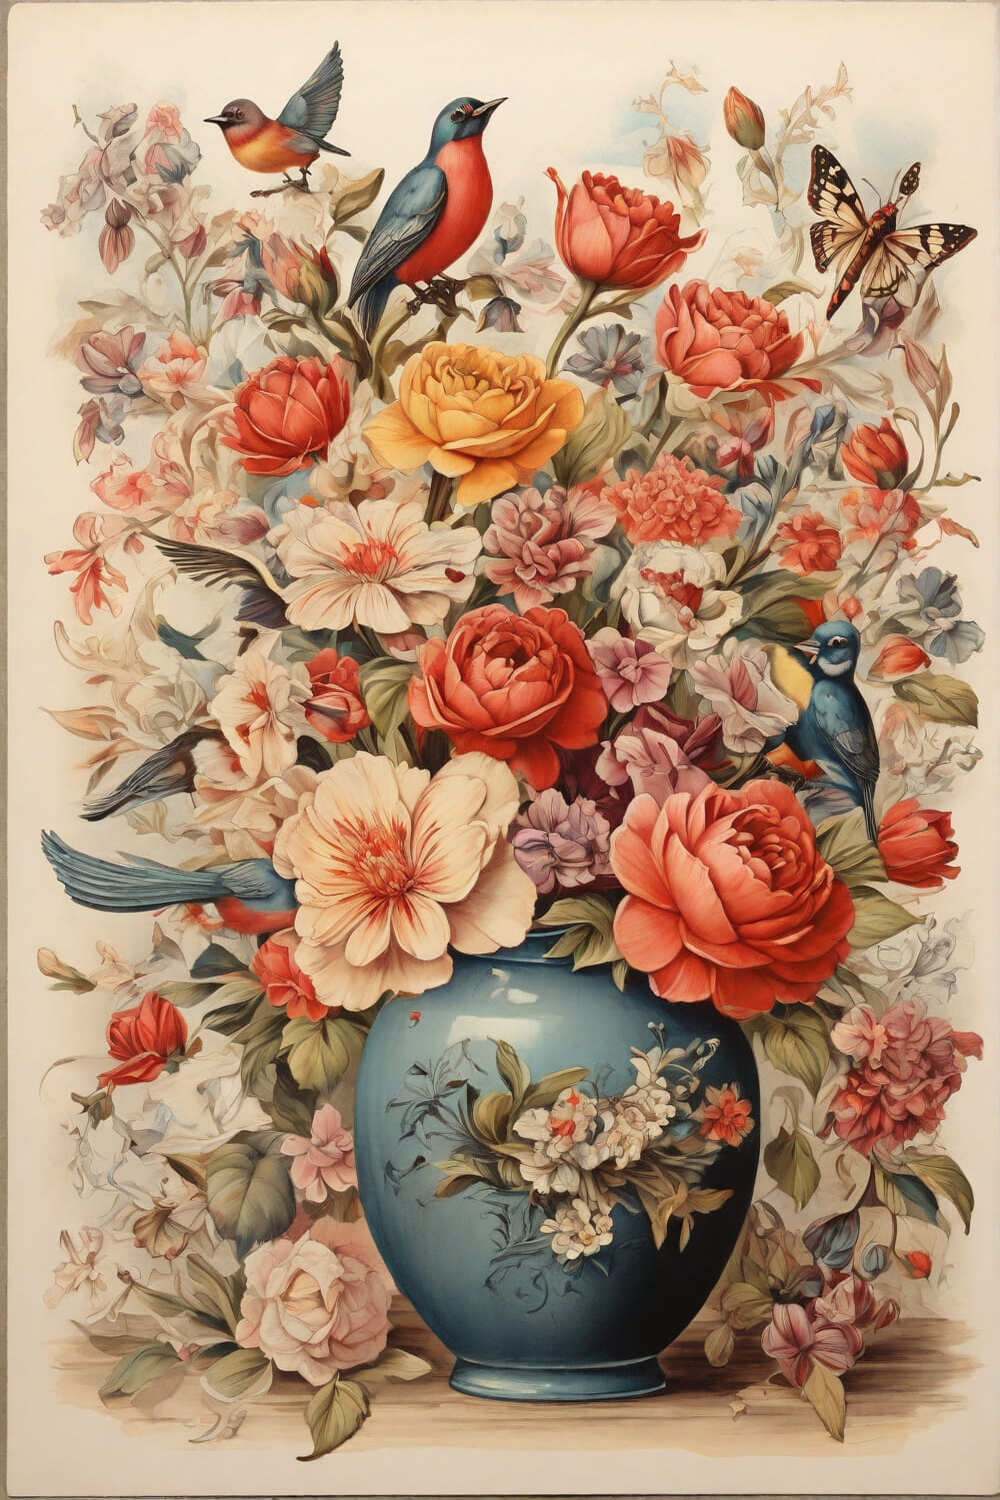 postcard, bouquet of flowers, vase, birds, butterflies pinterest preview image.